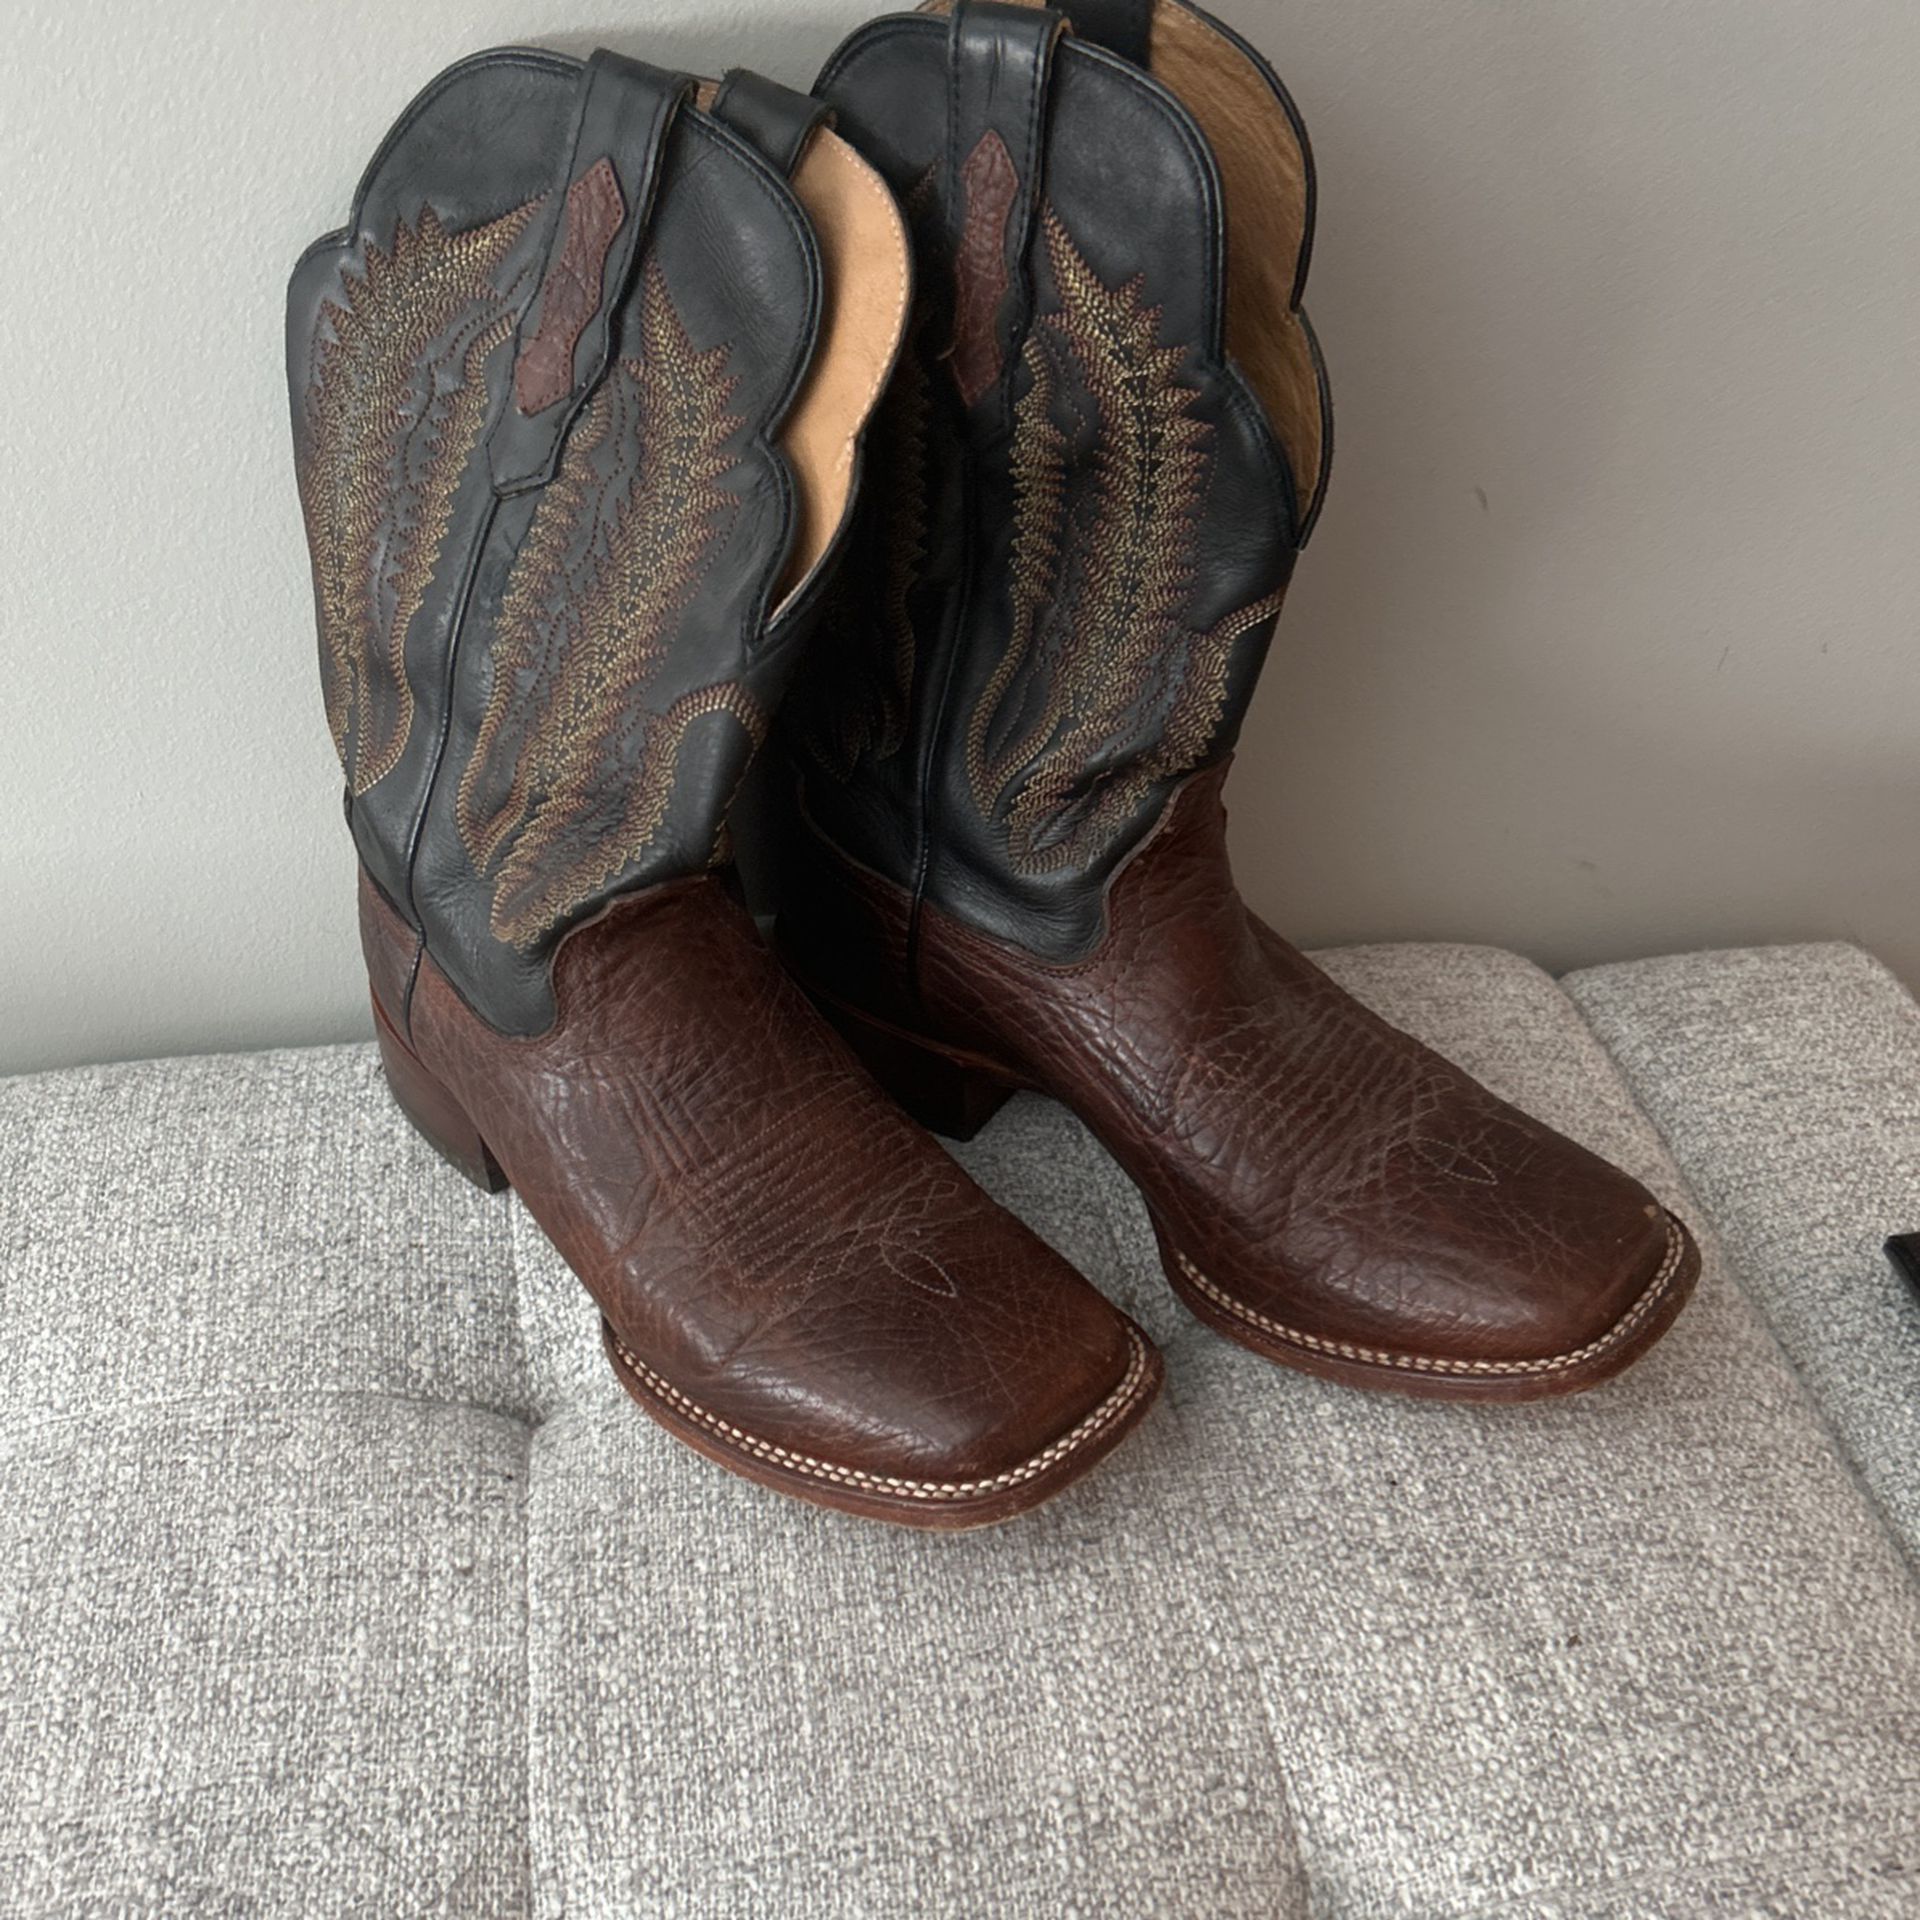 Cody James Cowboy Boots Size 8